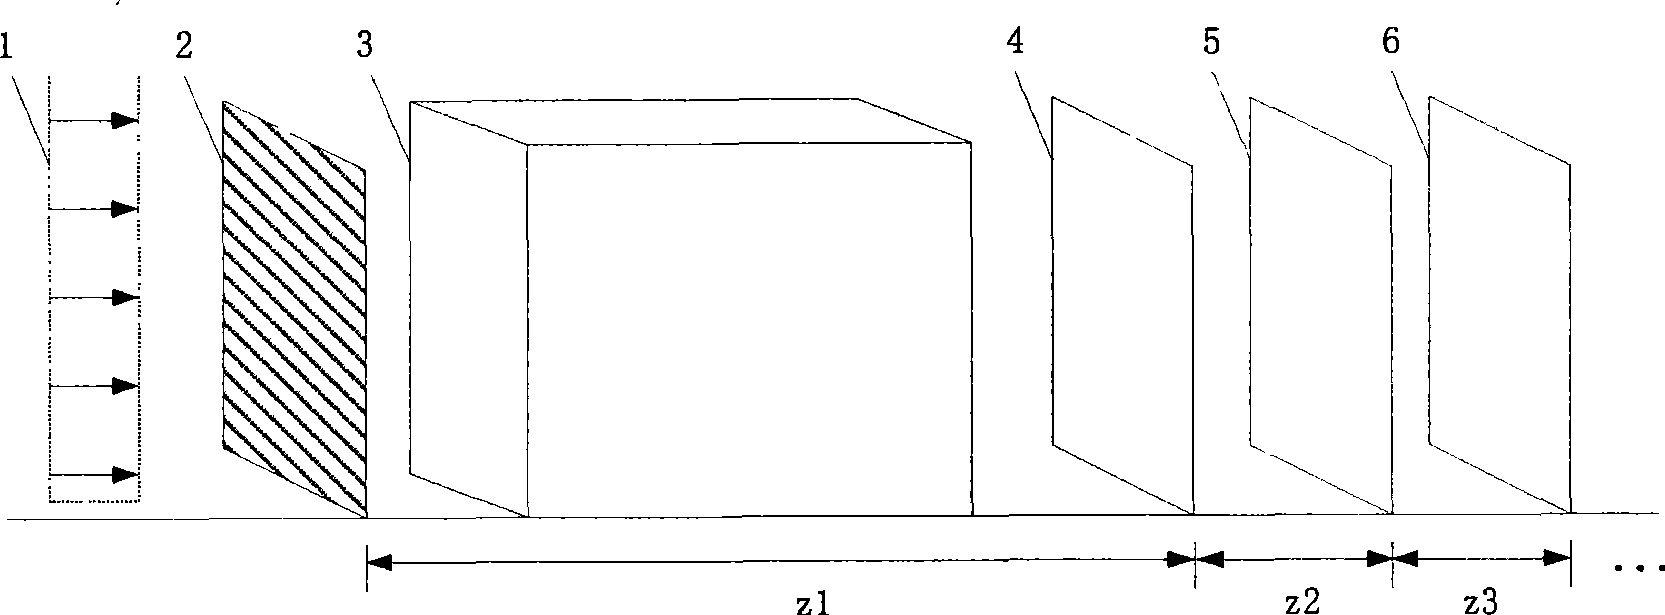 All phase modulation method three-dimensional complex light field